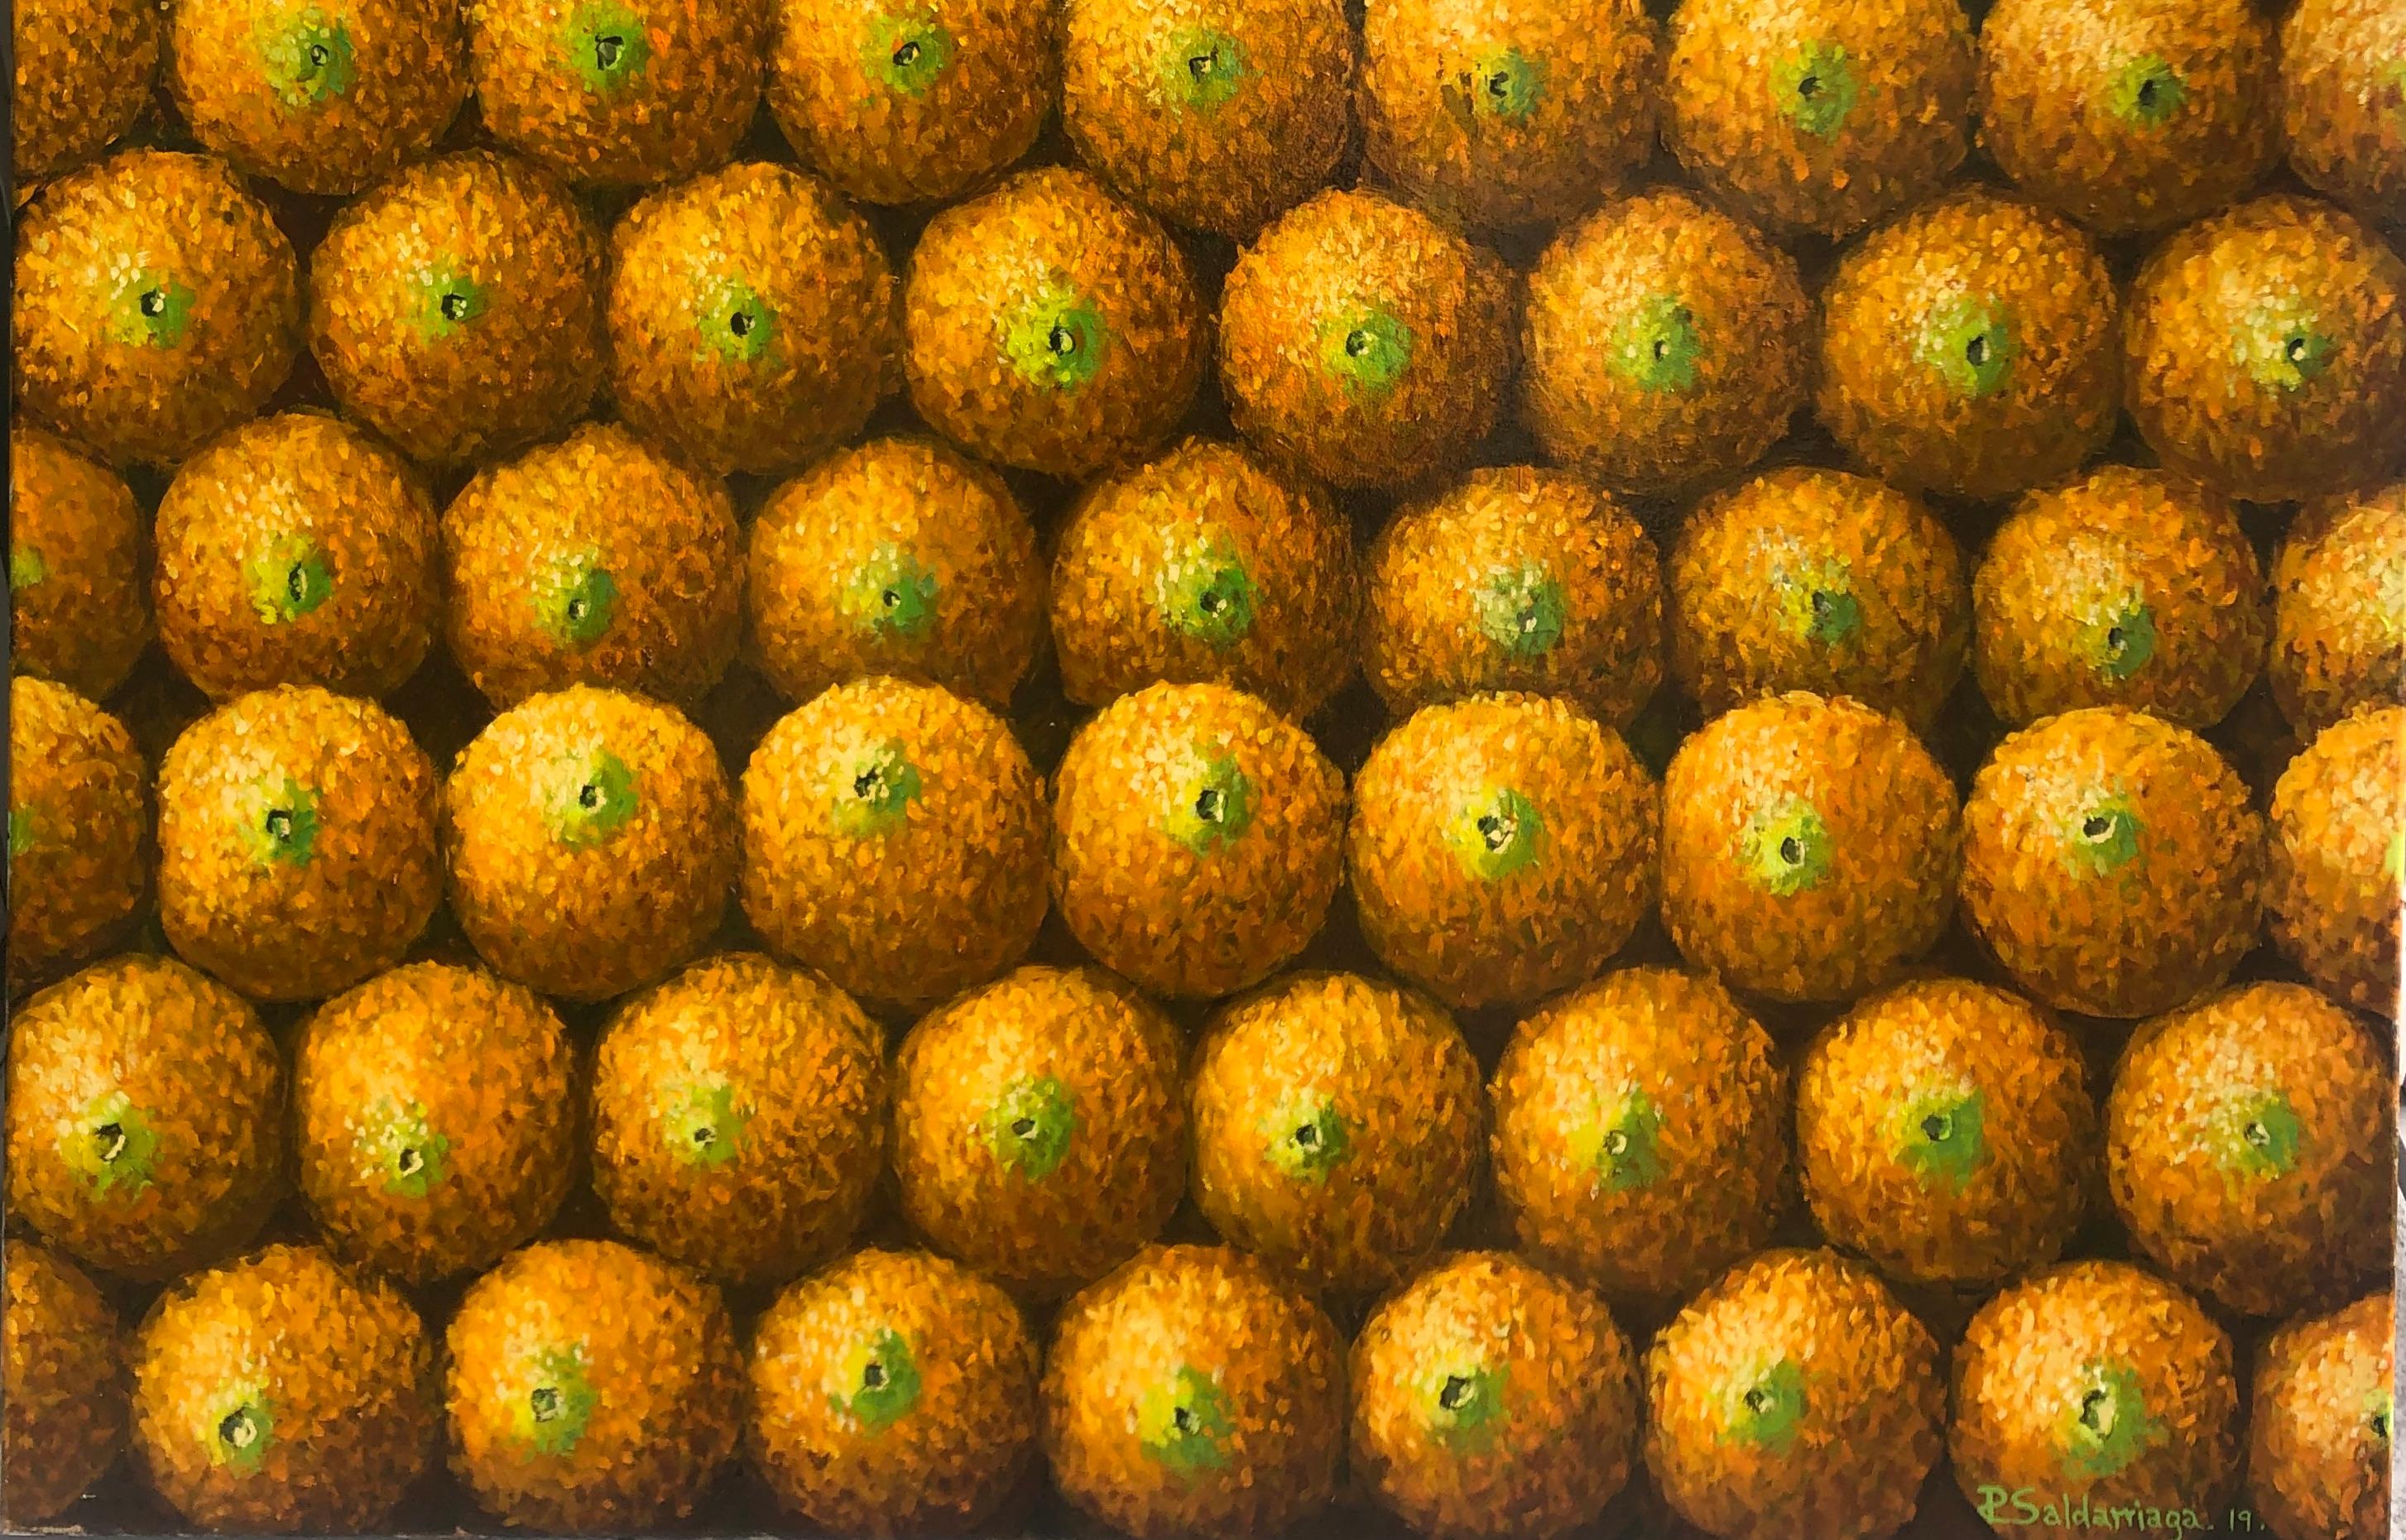 Wall Of Oranges   - Brown Figurative Painting by Rafael Saldarriaga